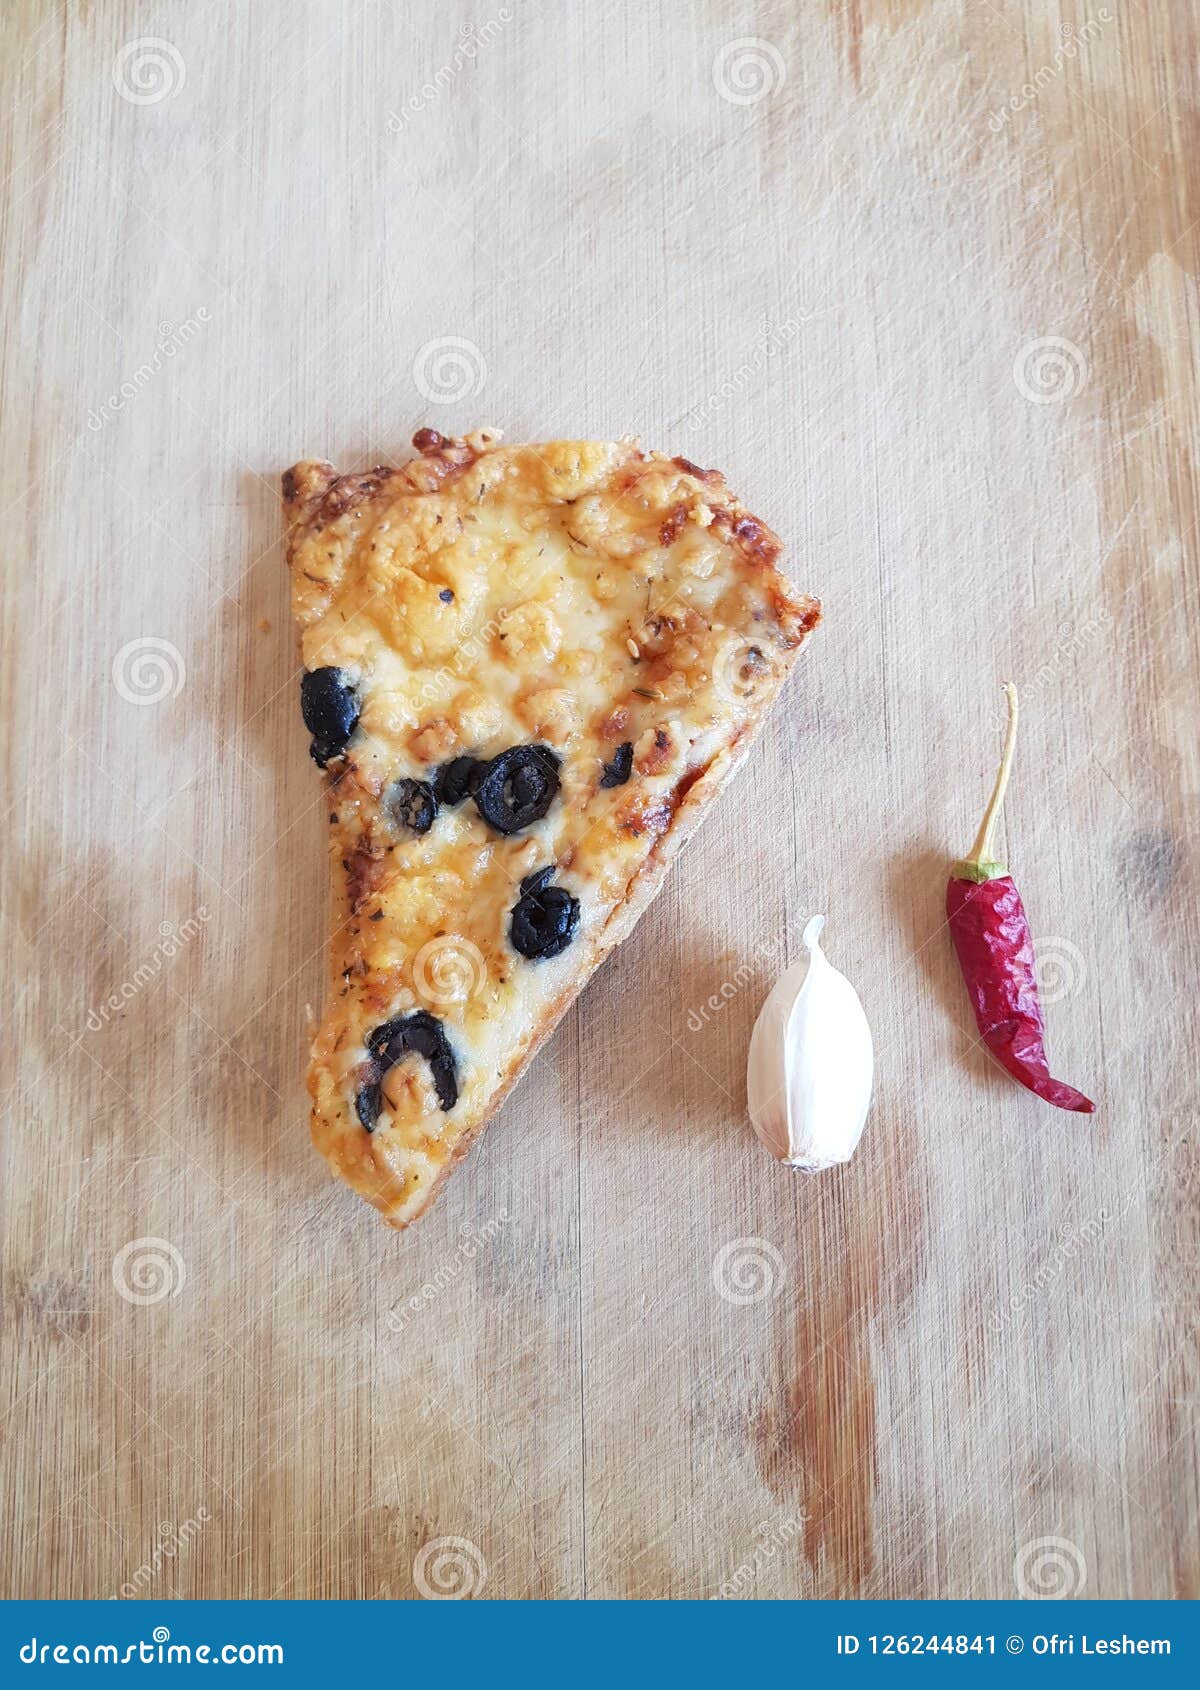 Slice Of Pizza With Black Olives Stock Image - Image of slice, near: 126244841